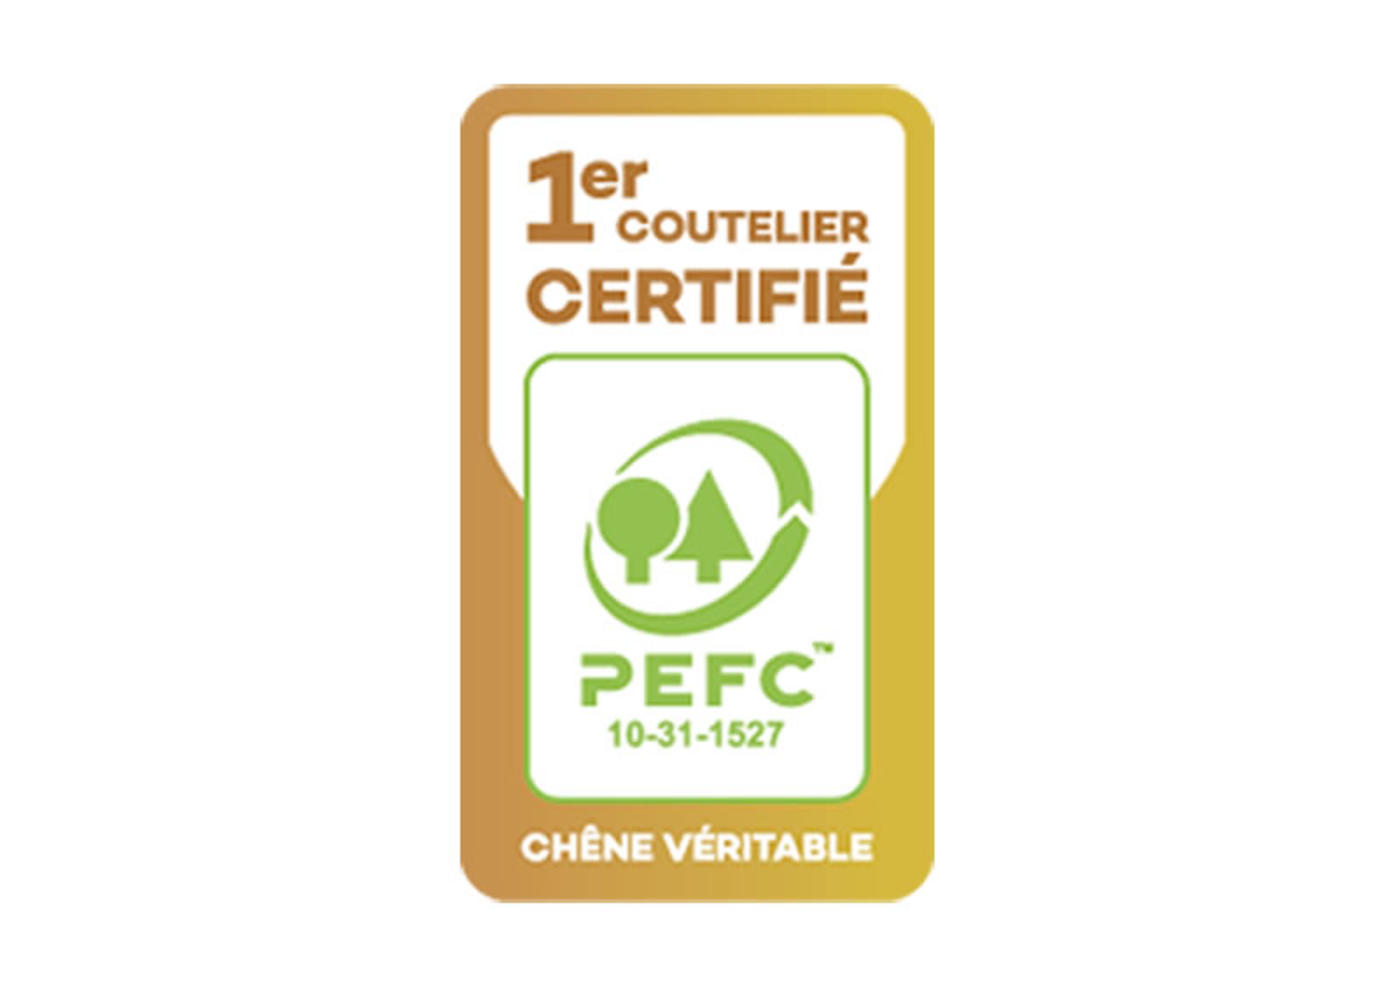 2009_Logo_Jean_Dubost_1er_coutelier_certifie_PEFC_depuis_2009